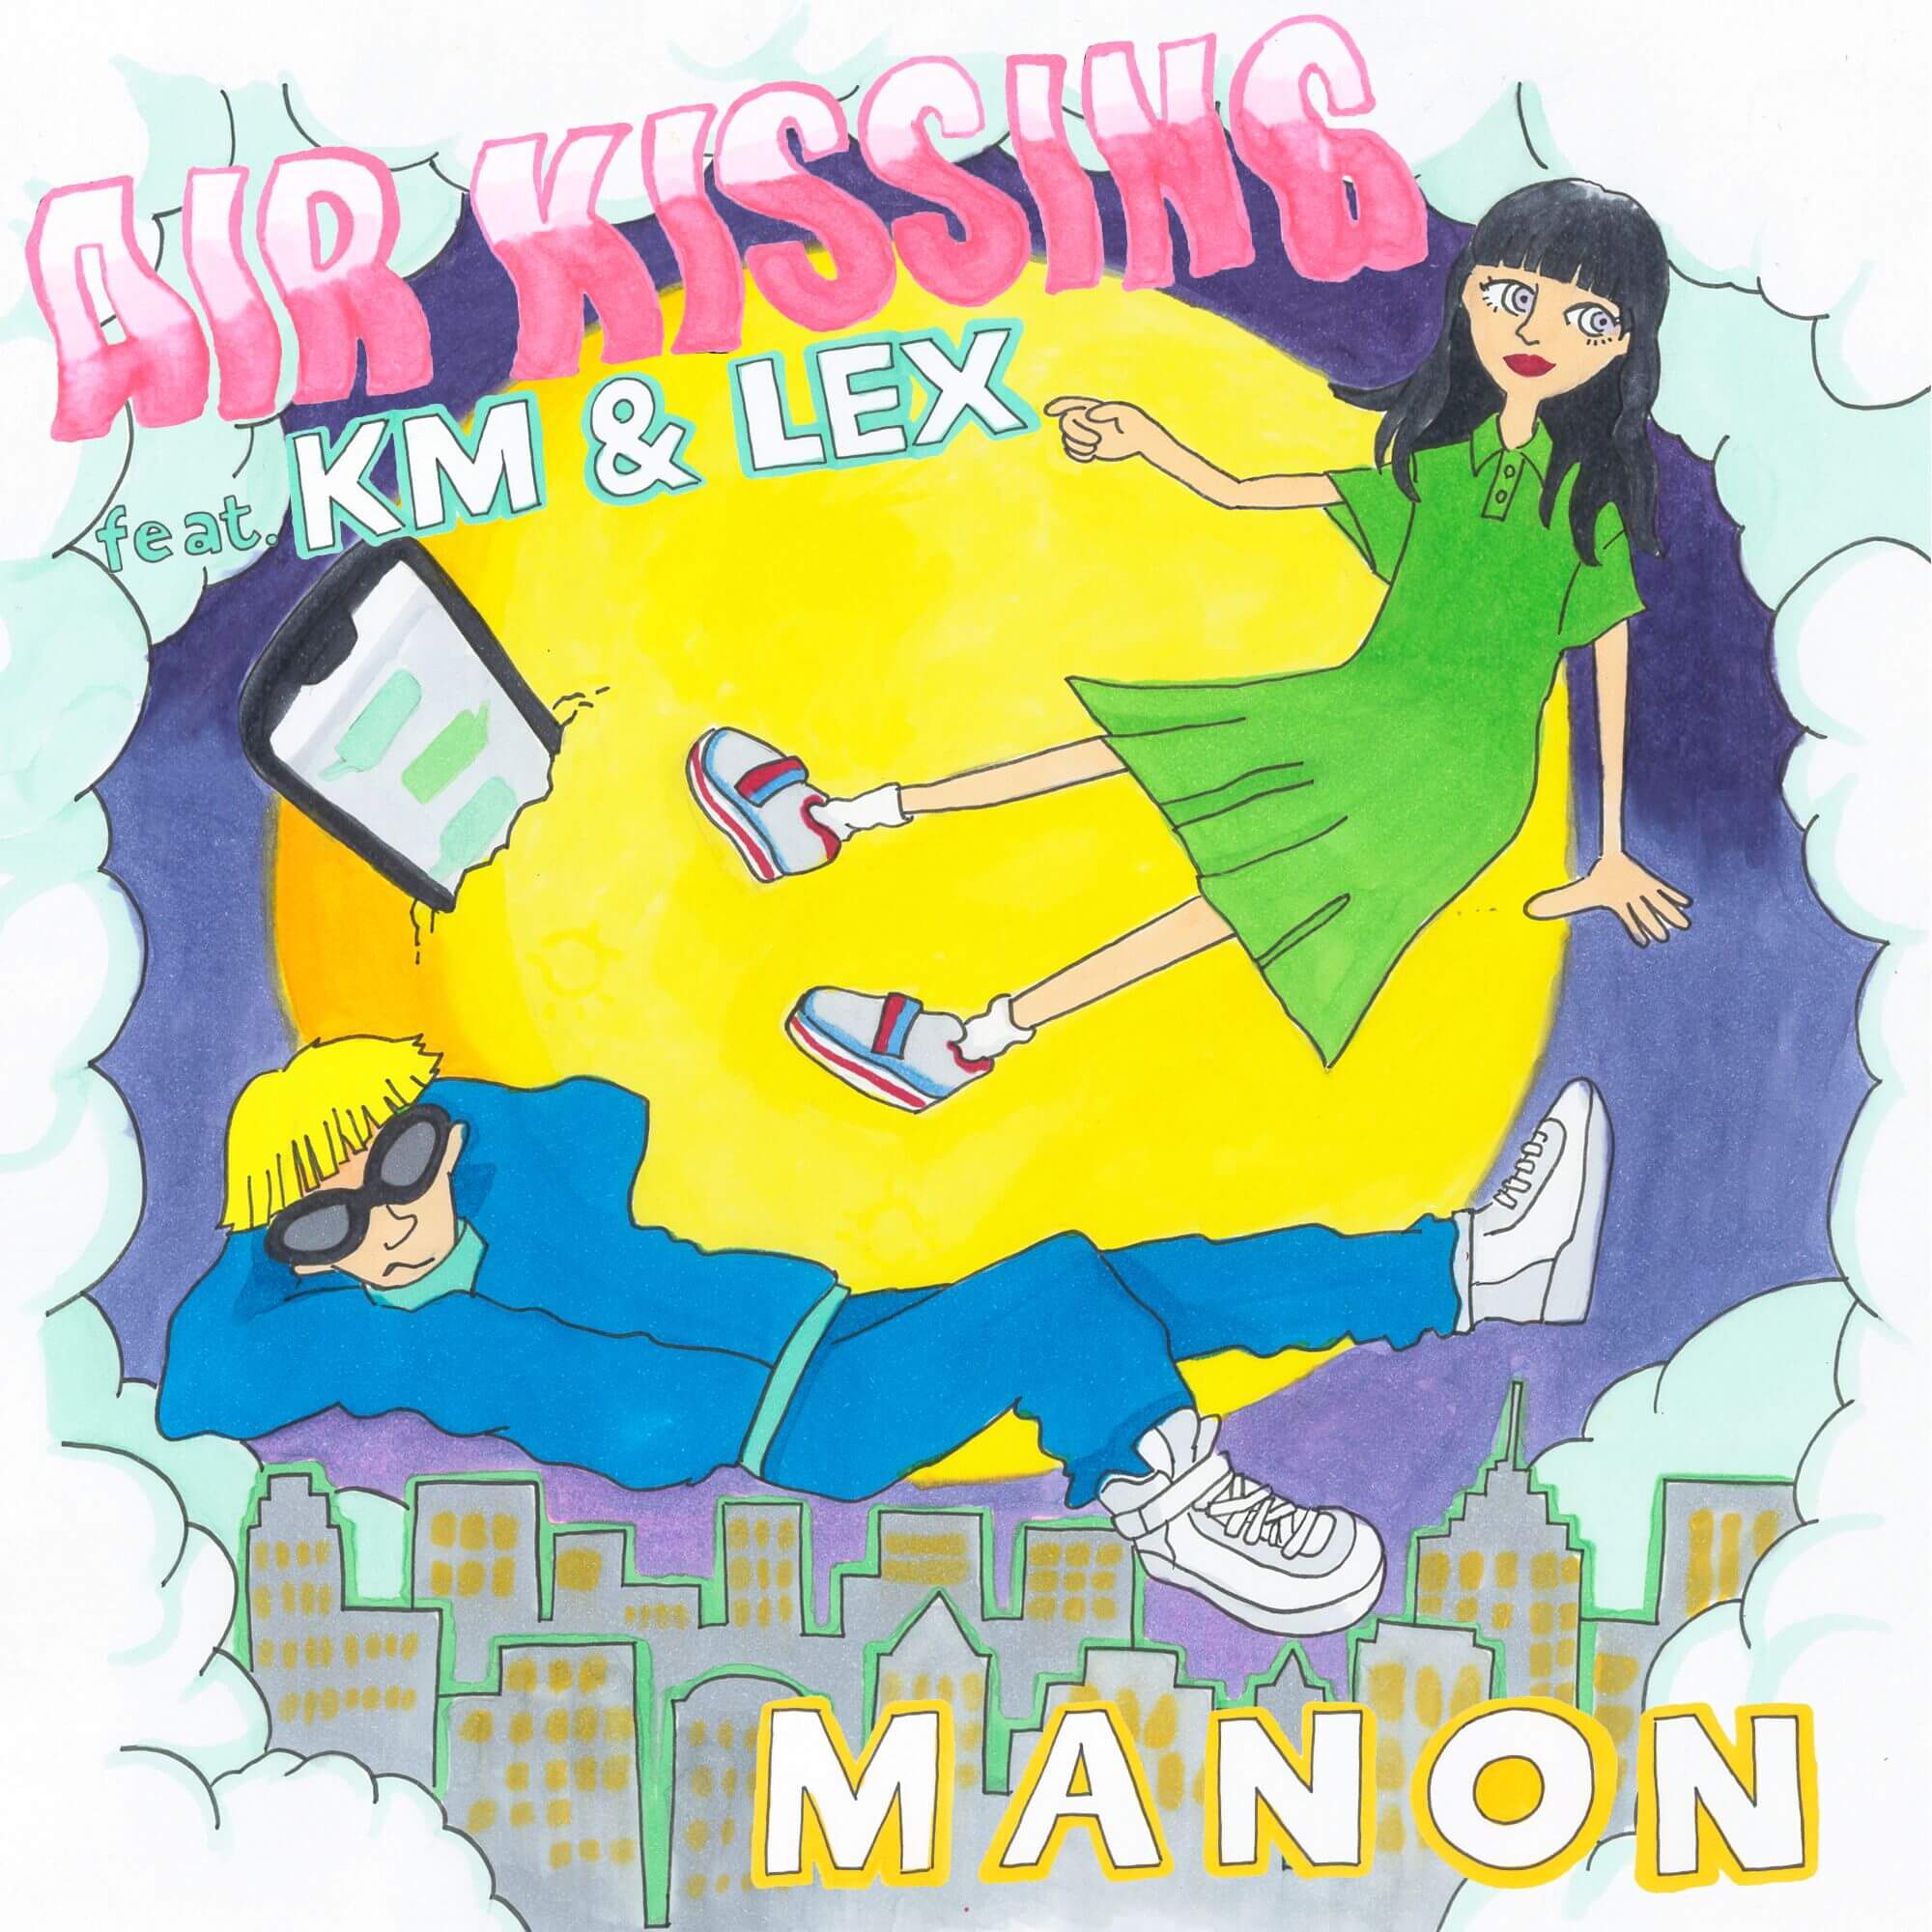 MANON マノン AIR KISSING feat. KM & LEX